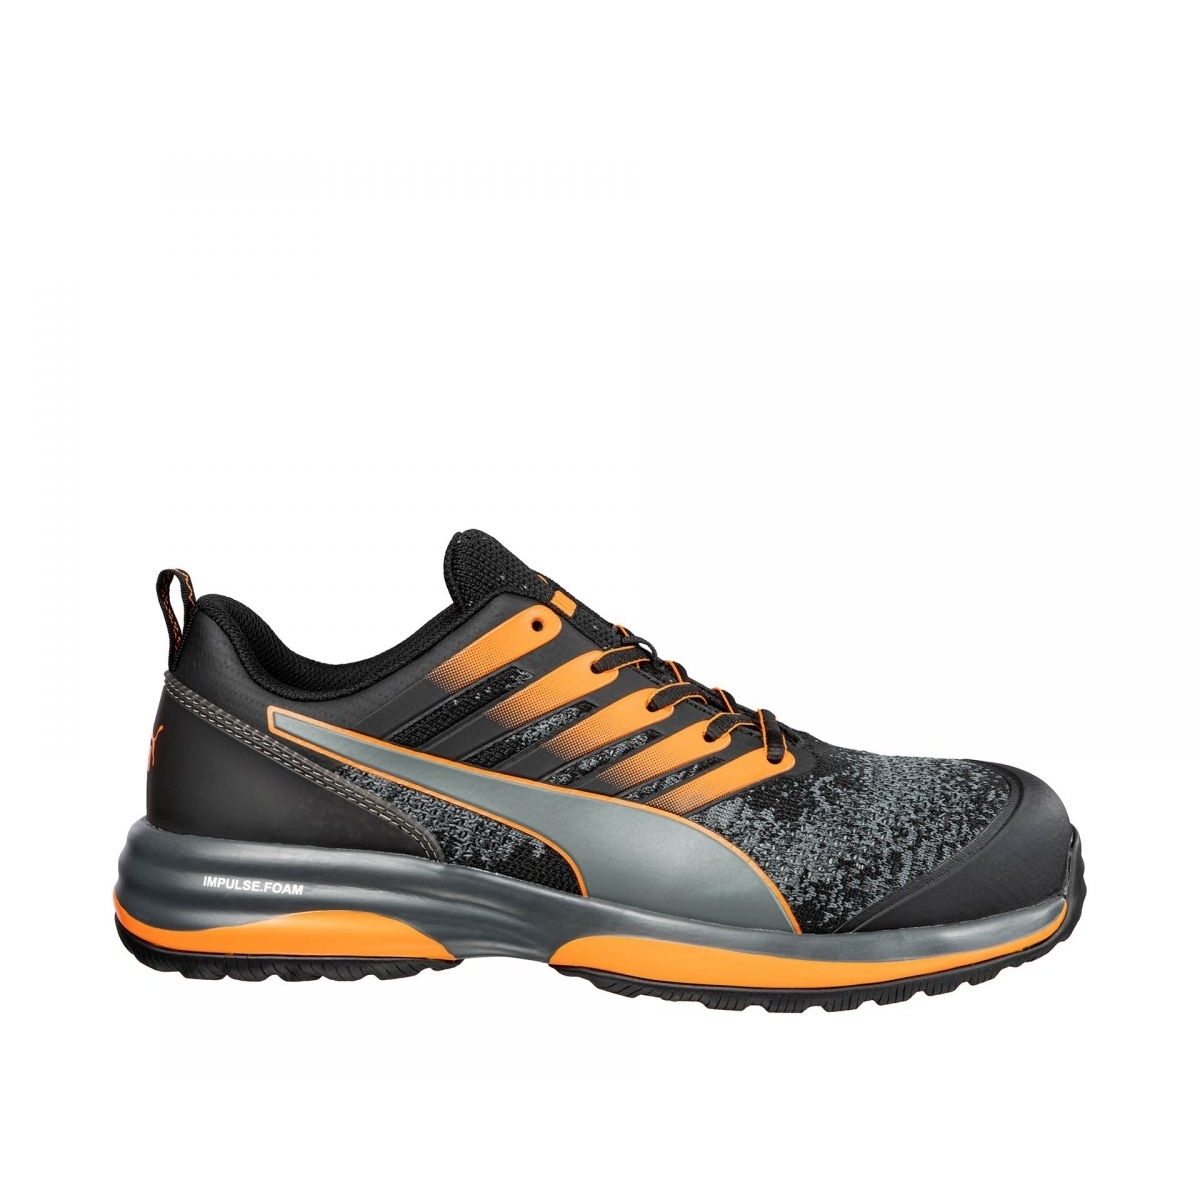 PUMA Safety Men's Charge Low Composite Toe EH Work Shoes Orange - 644555-294 ORANGE - ORANGE, 11